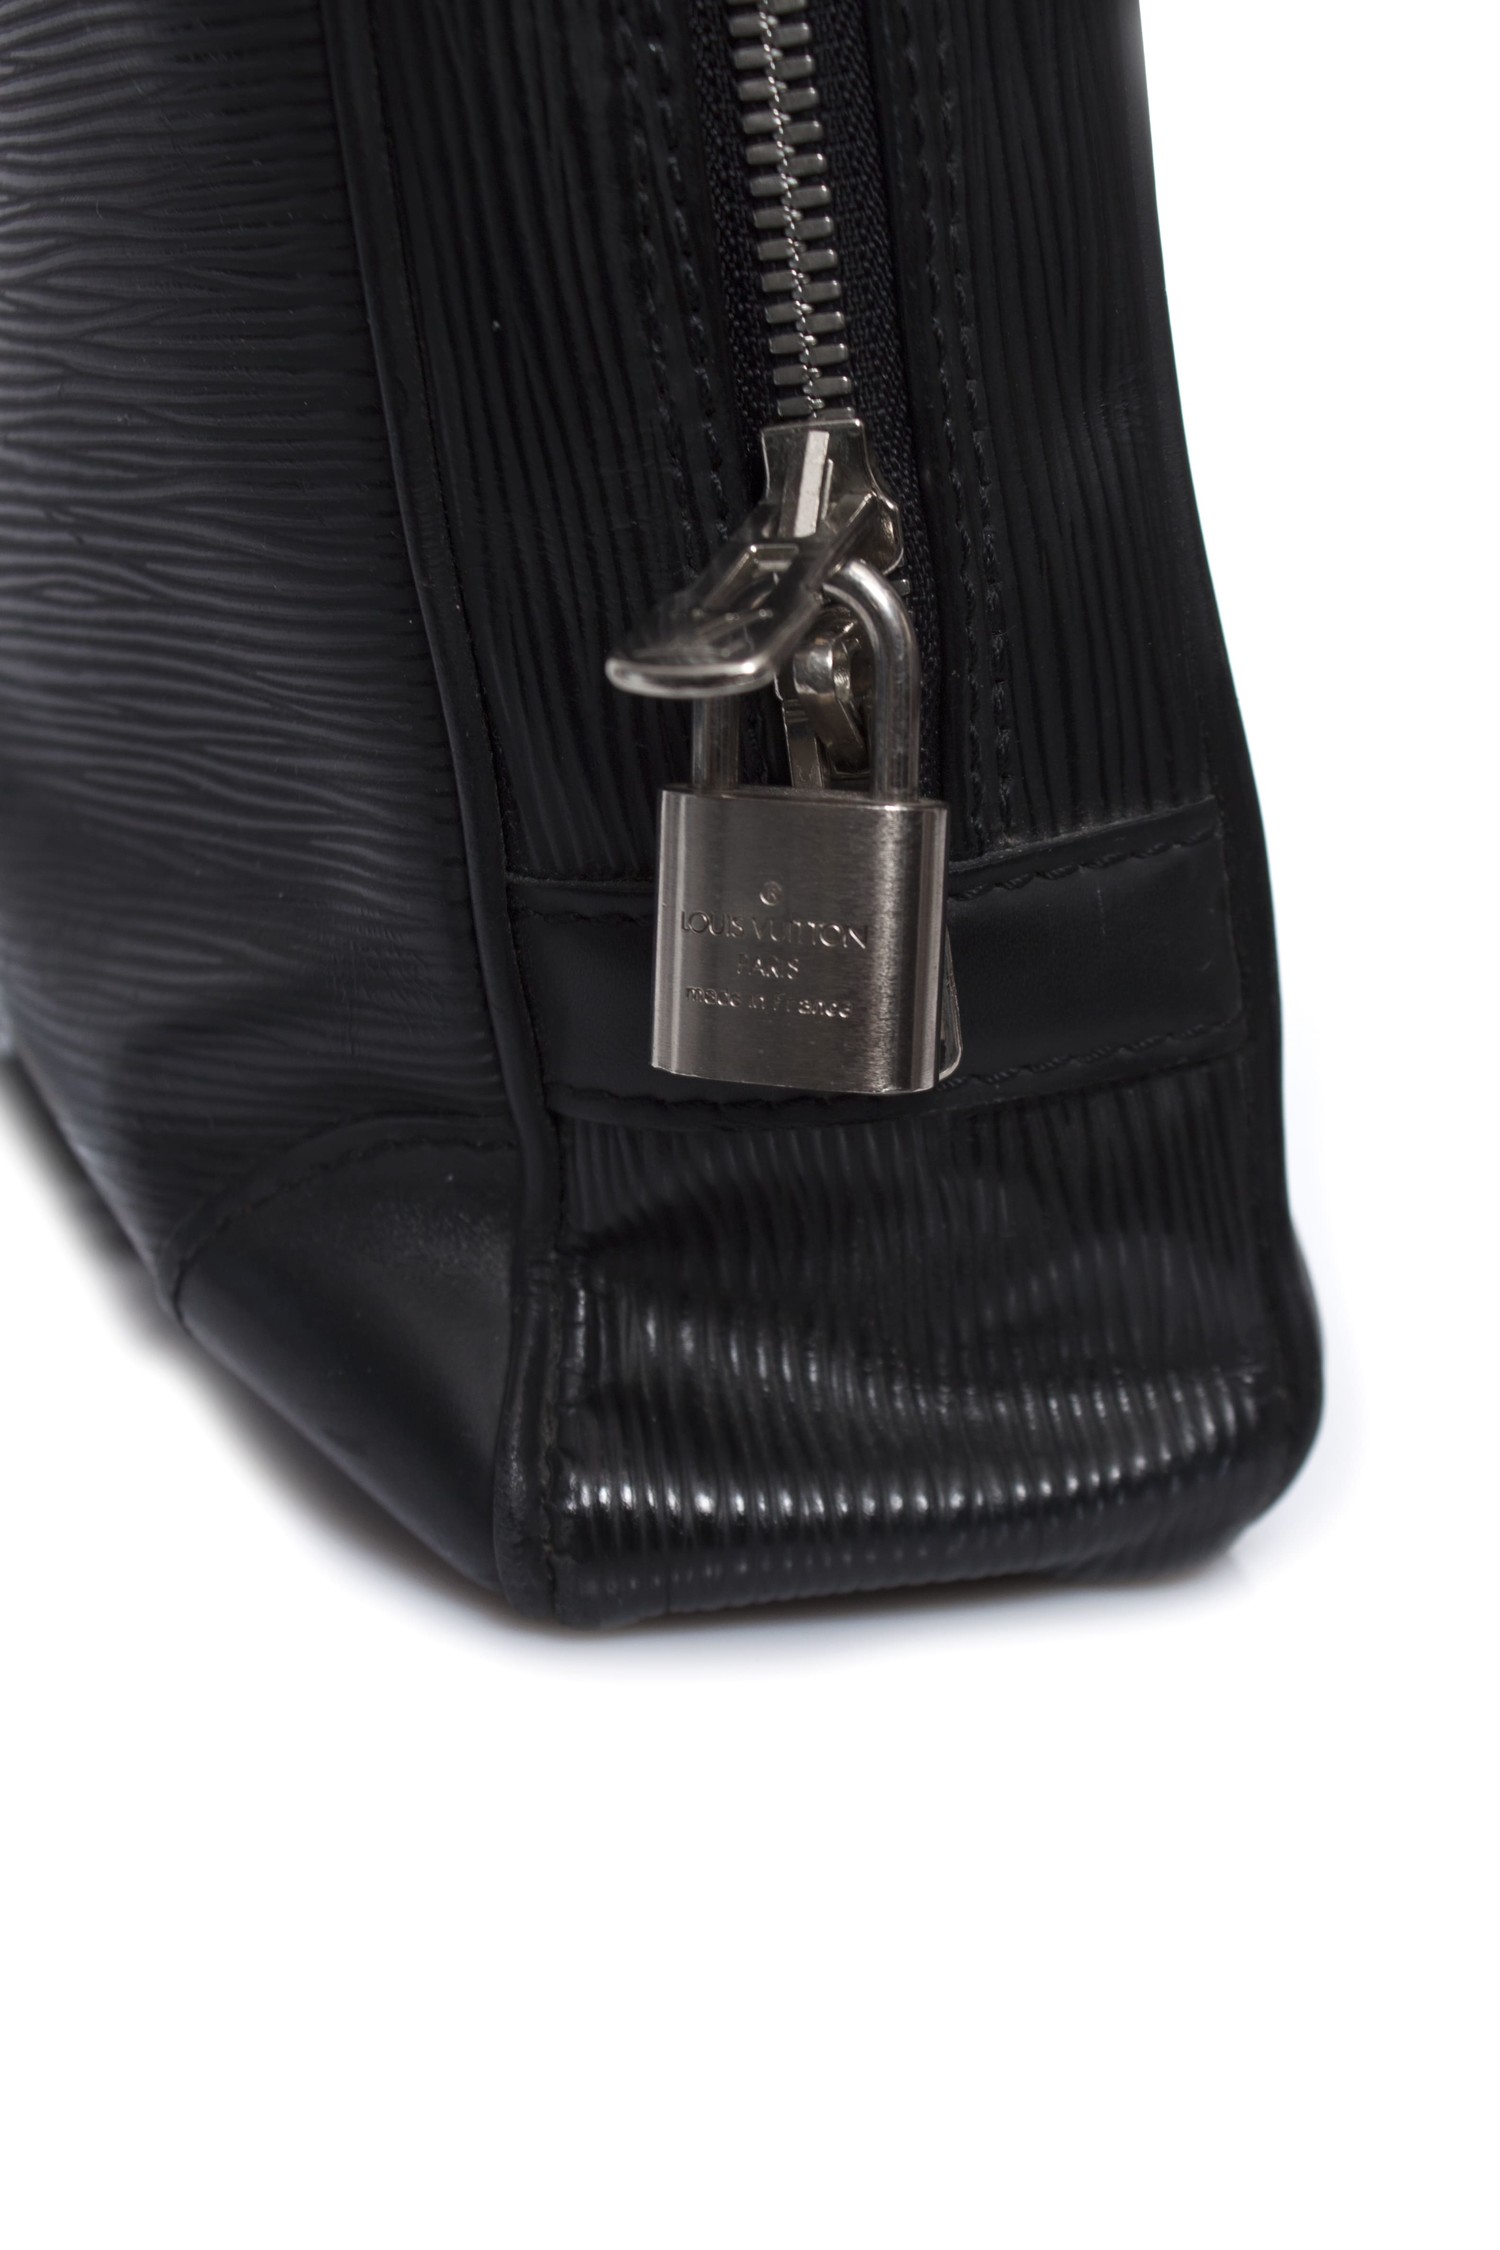 Louis Vuitton - Louis Vuitton Documents Bag on Designer Wardrobe